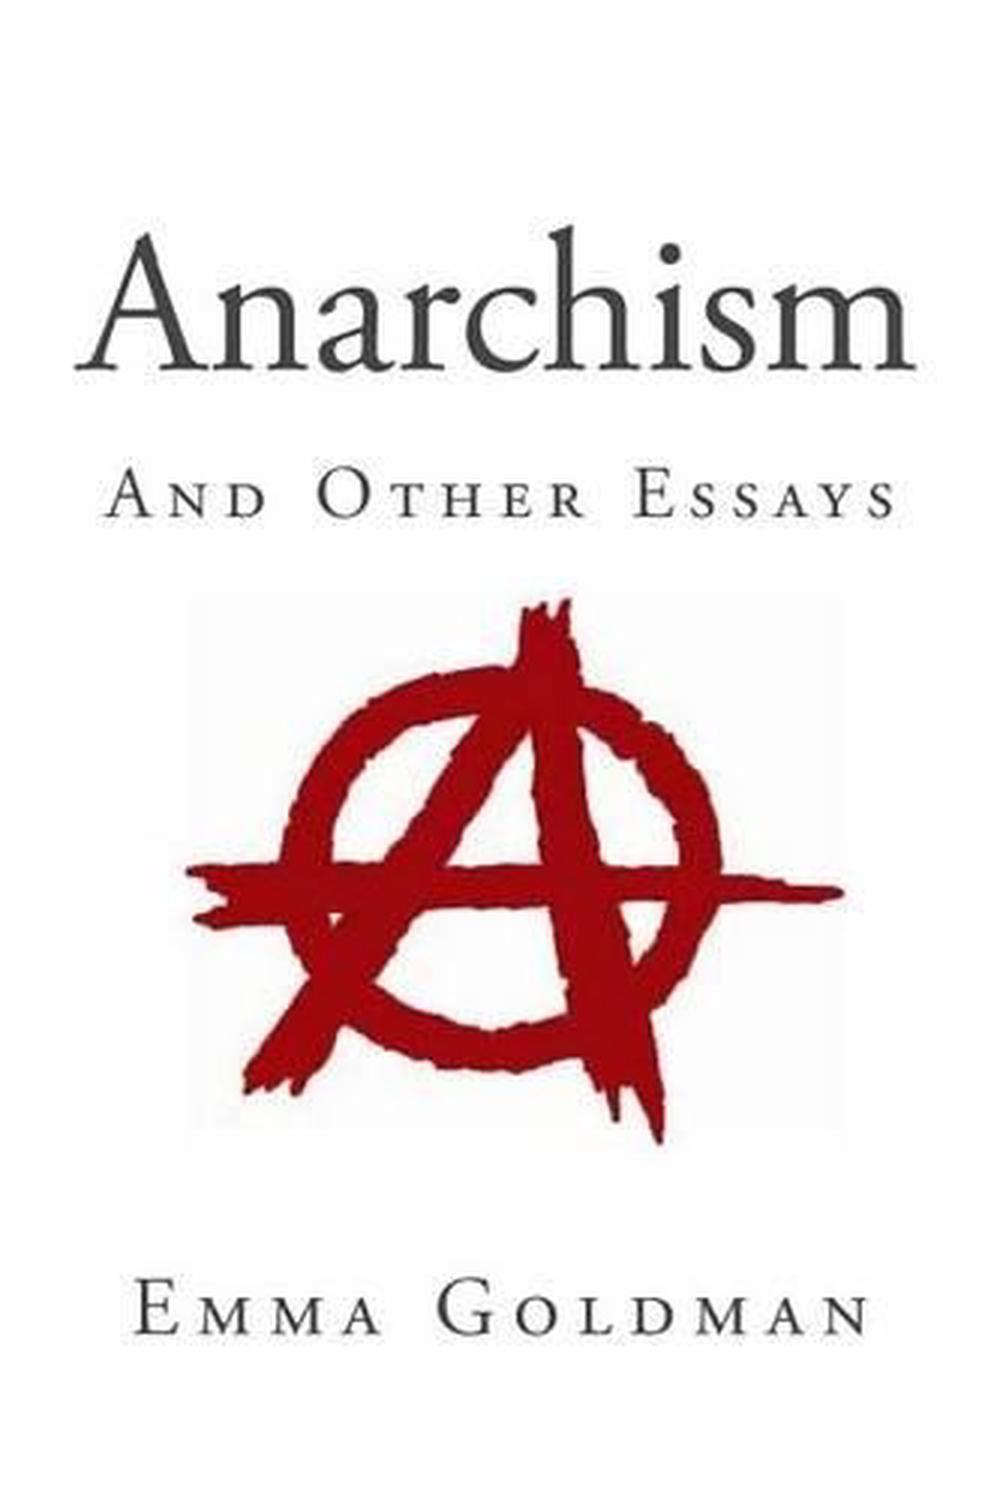 emma goldman anarchism and other essays pdf